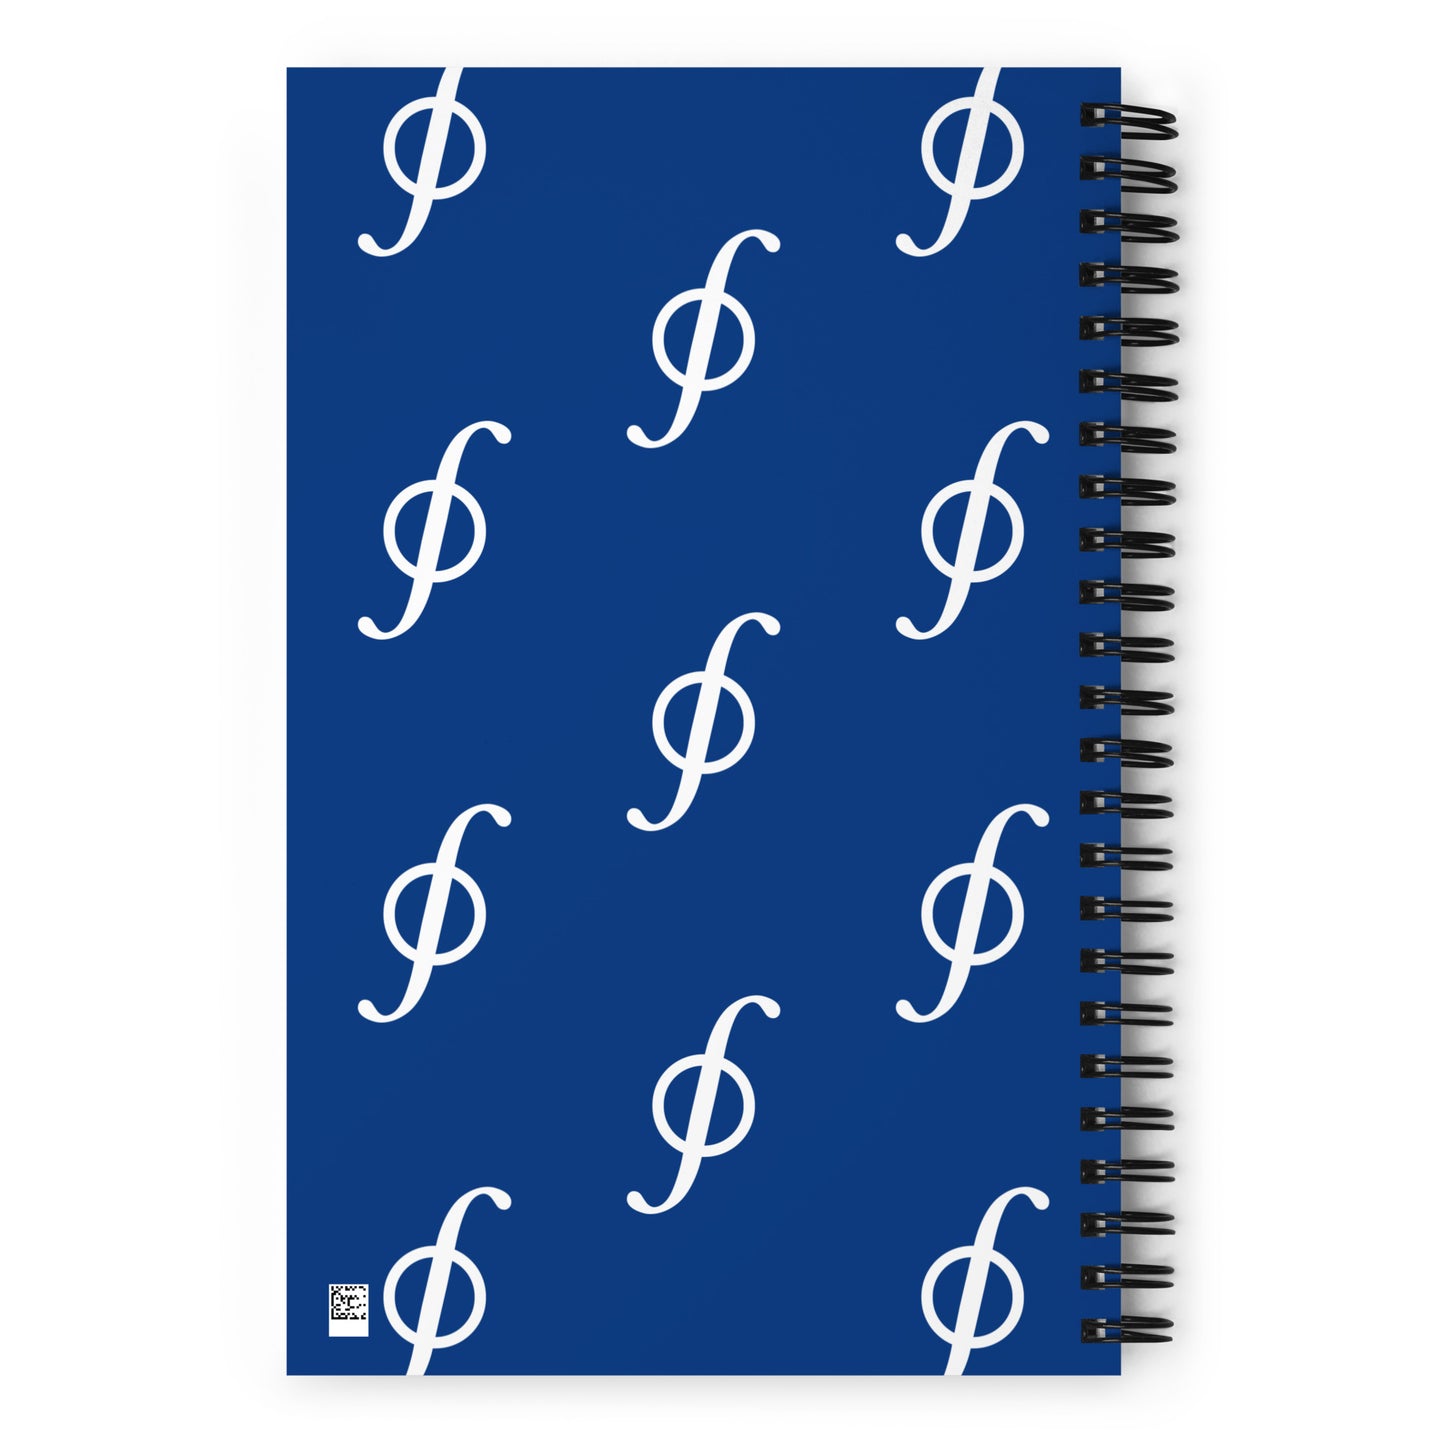 FF Spiral notebook